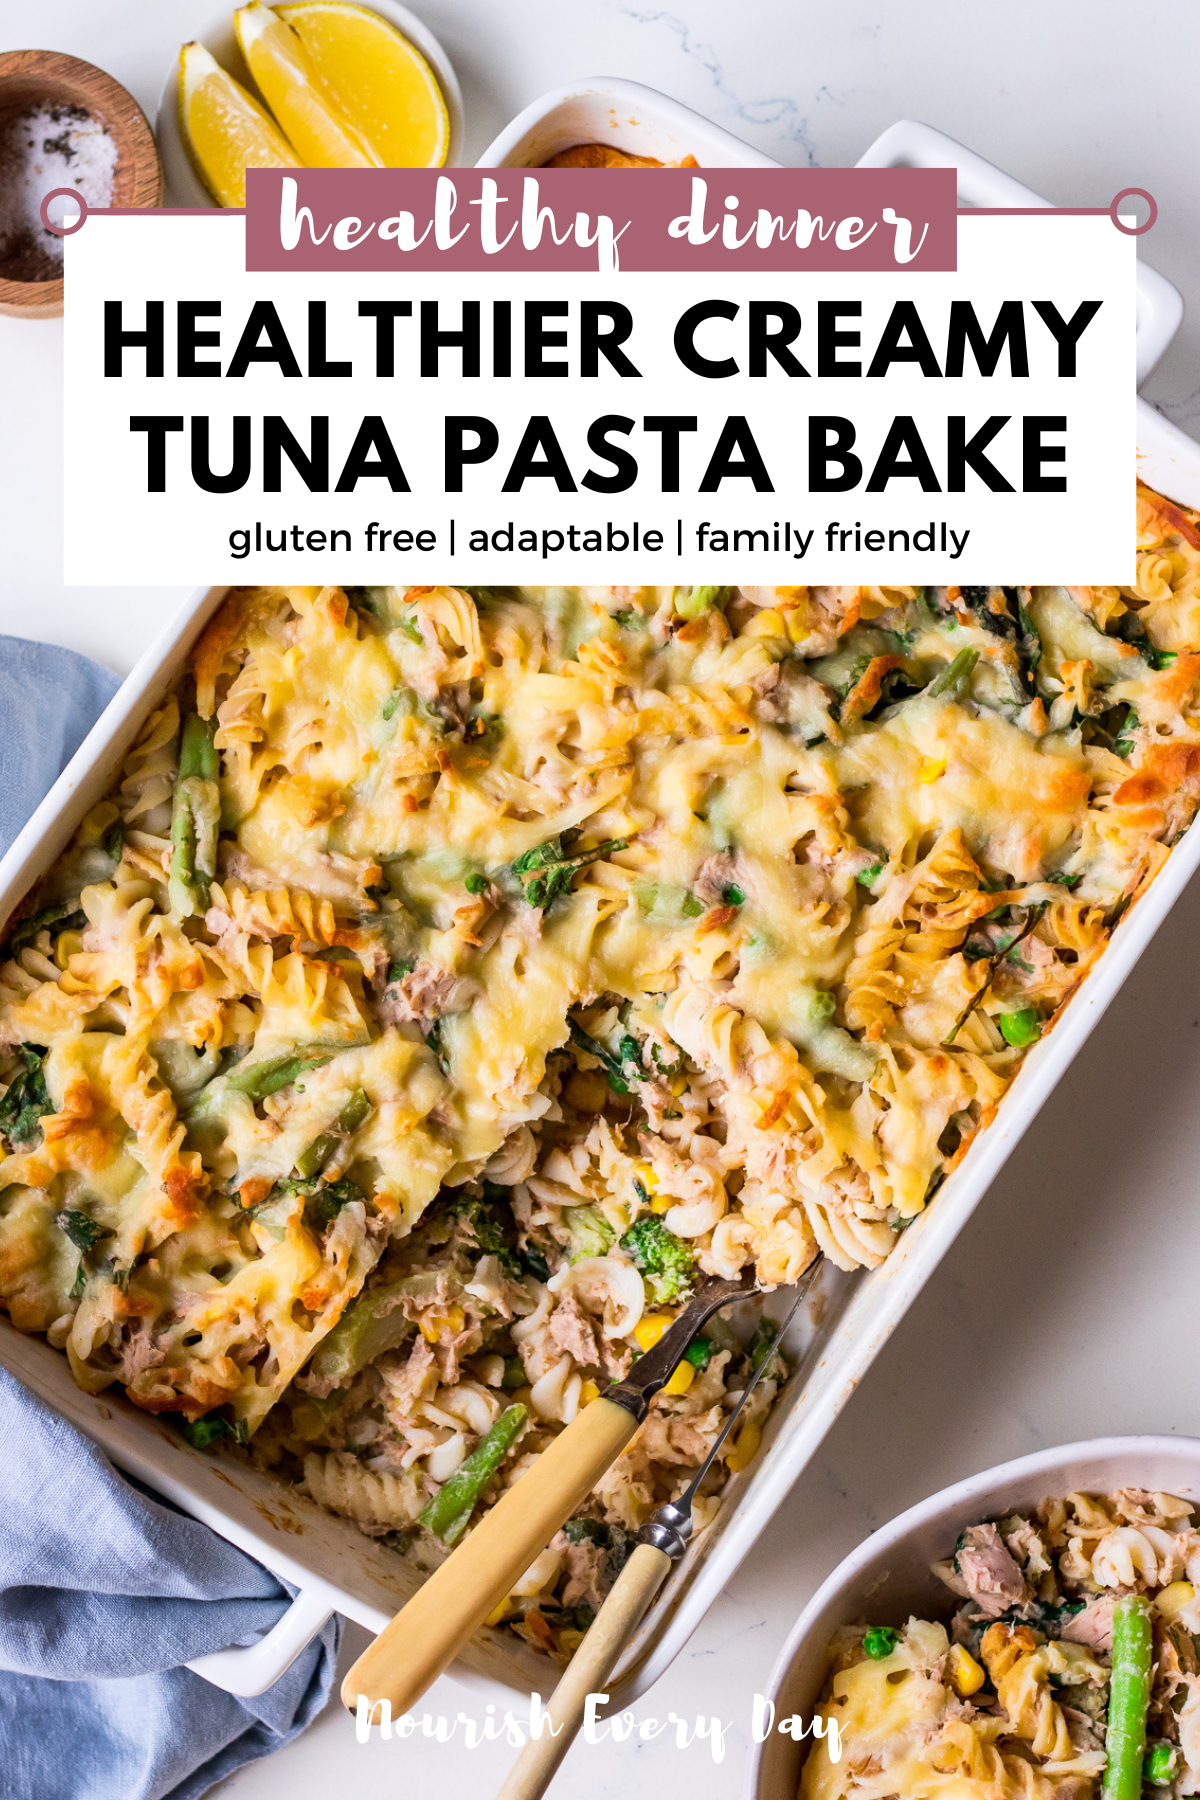 Recipe Image Pin for Creamy Tuna Pasta Bake by Nourish Everyday